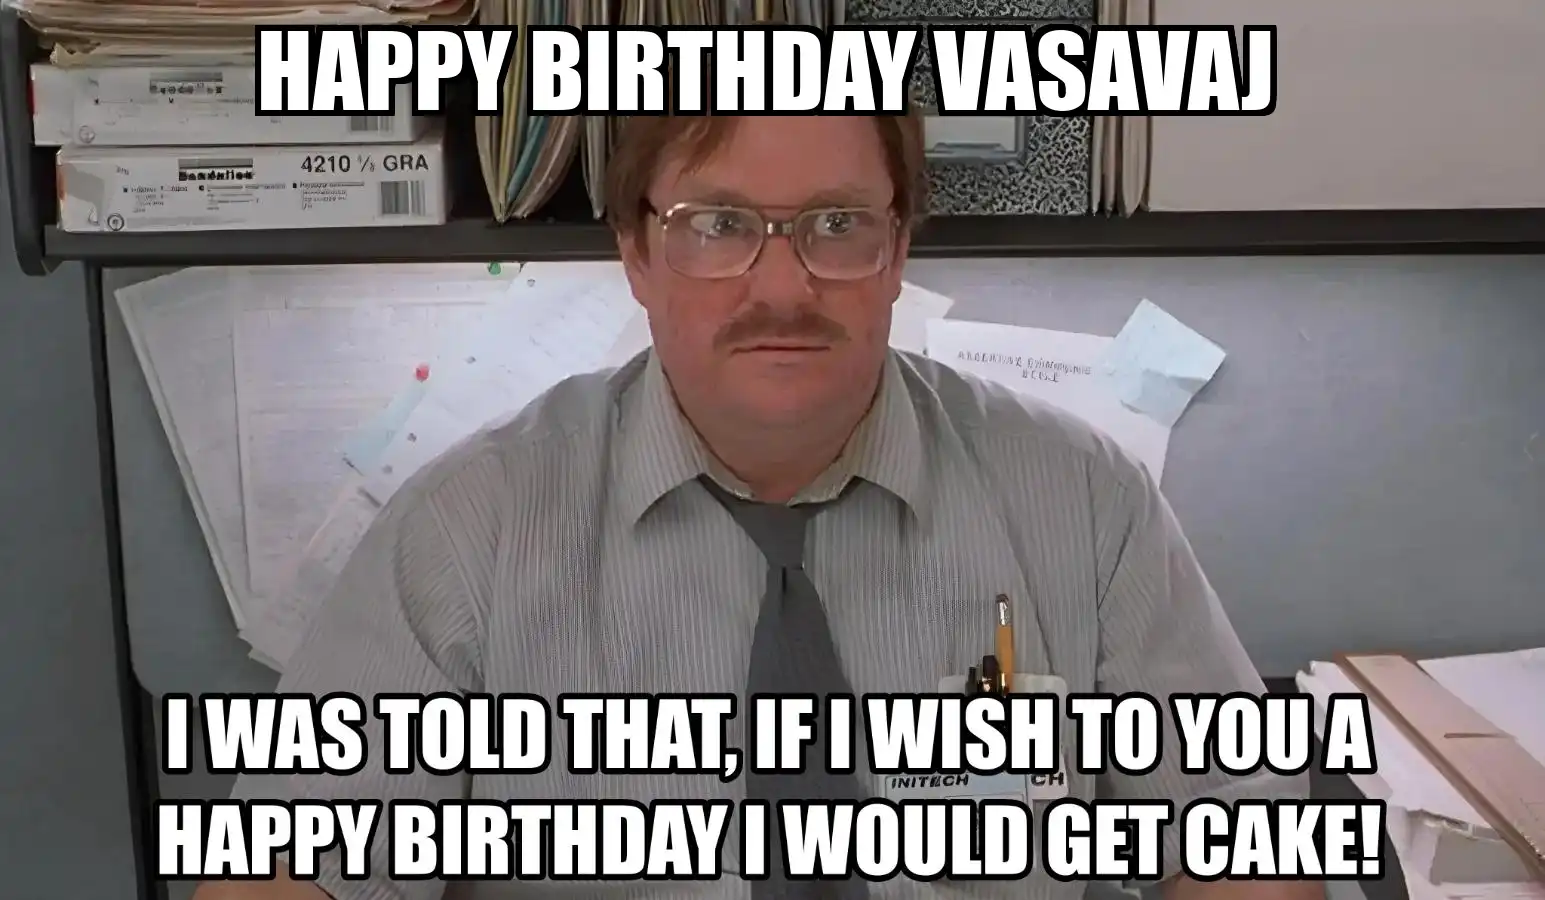 Happy Birthday Vasavaj I Would Get A Cake Meme